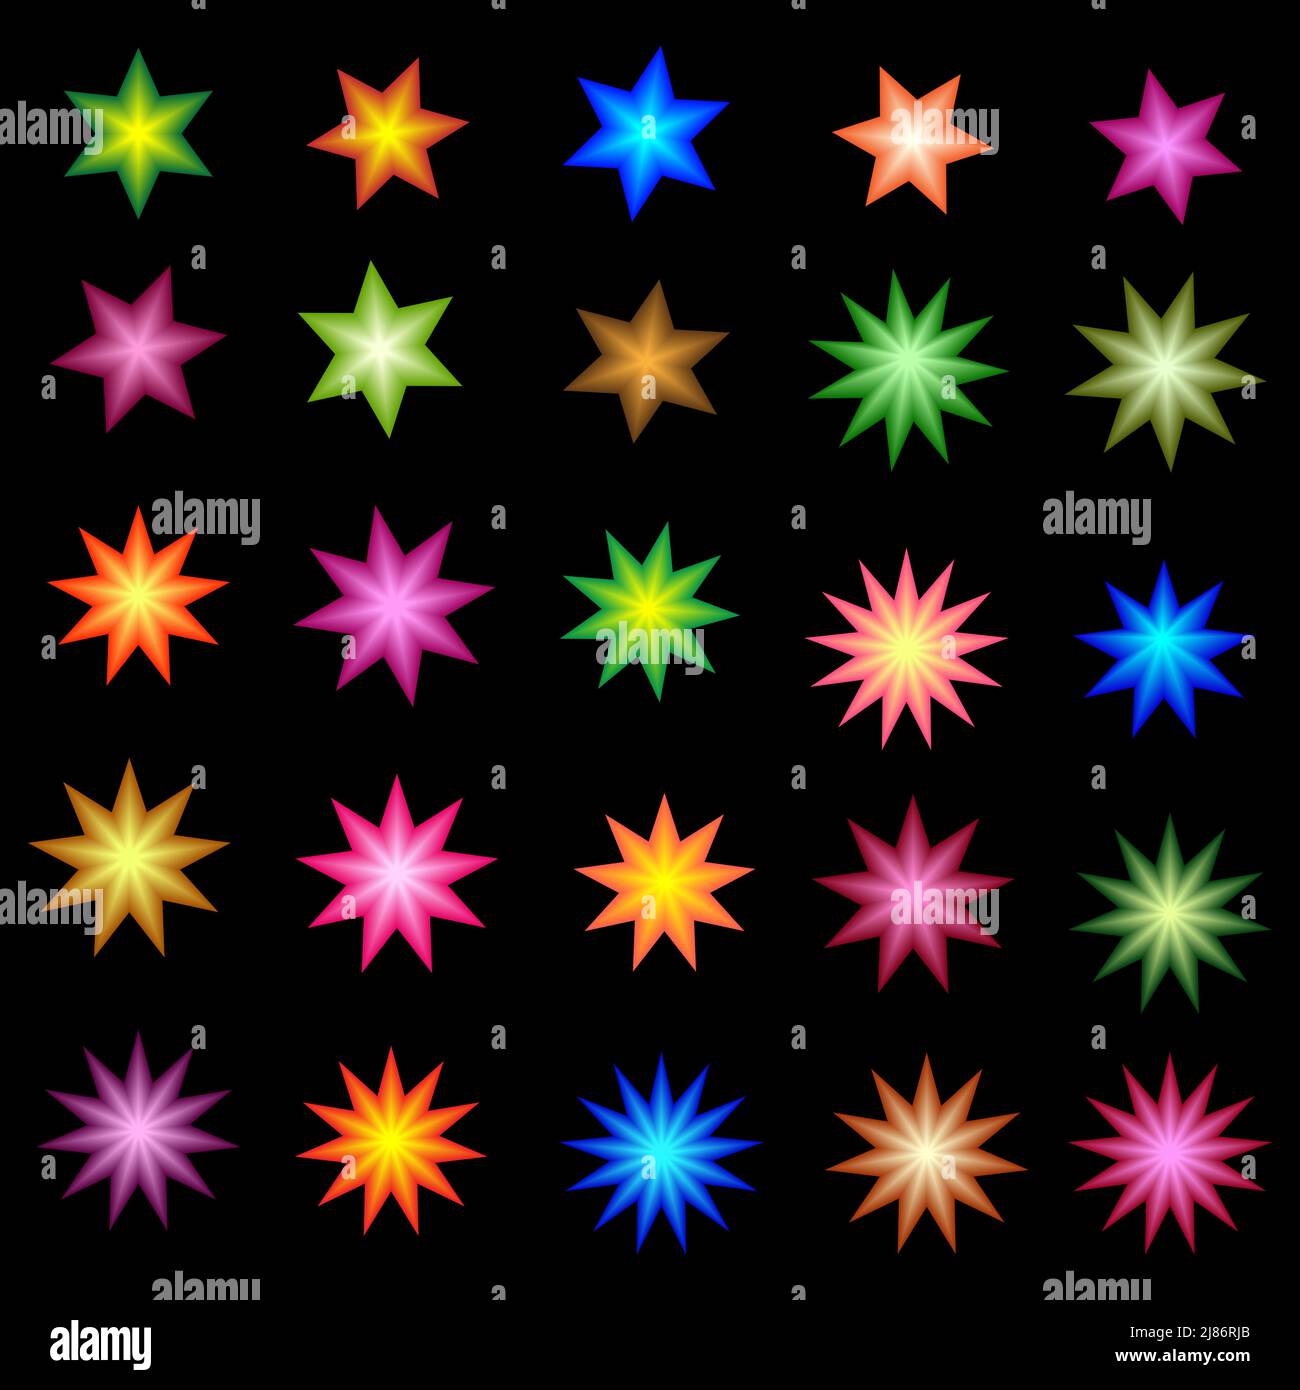 Sammlung von Sternen Farbe Symbol Form Knopf Aufkleber Förderung abstrakten Hintergrund Vektor Illustration Stock Vektor